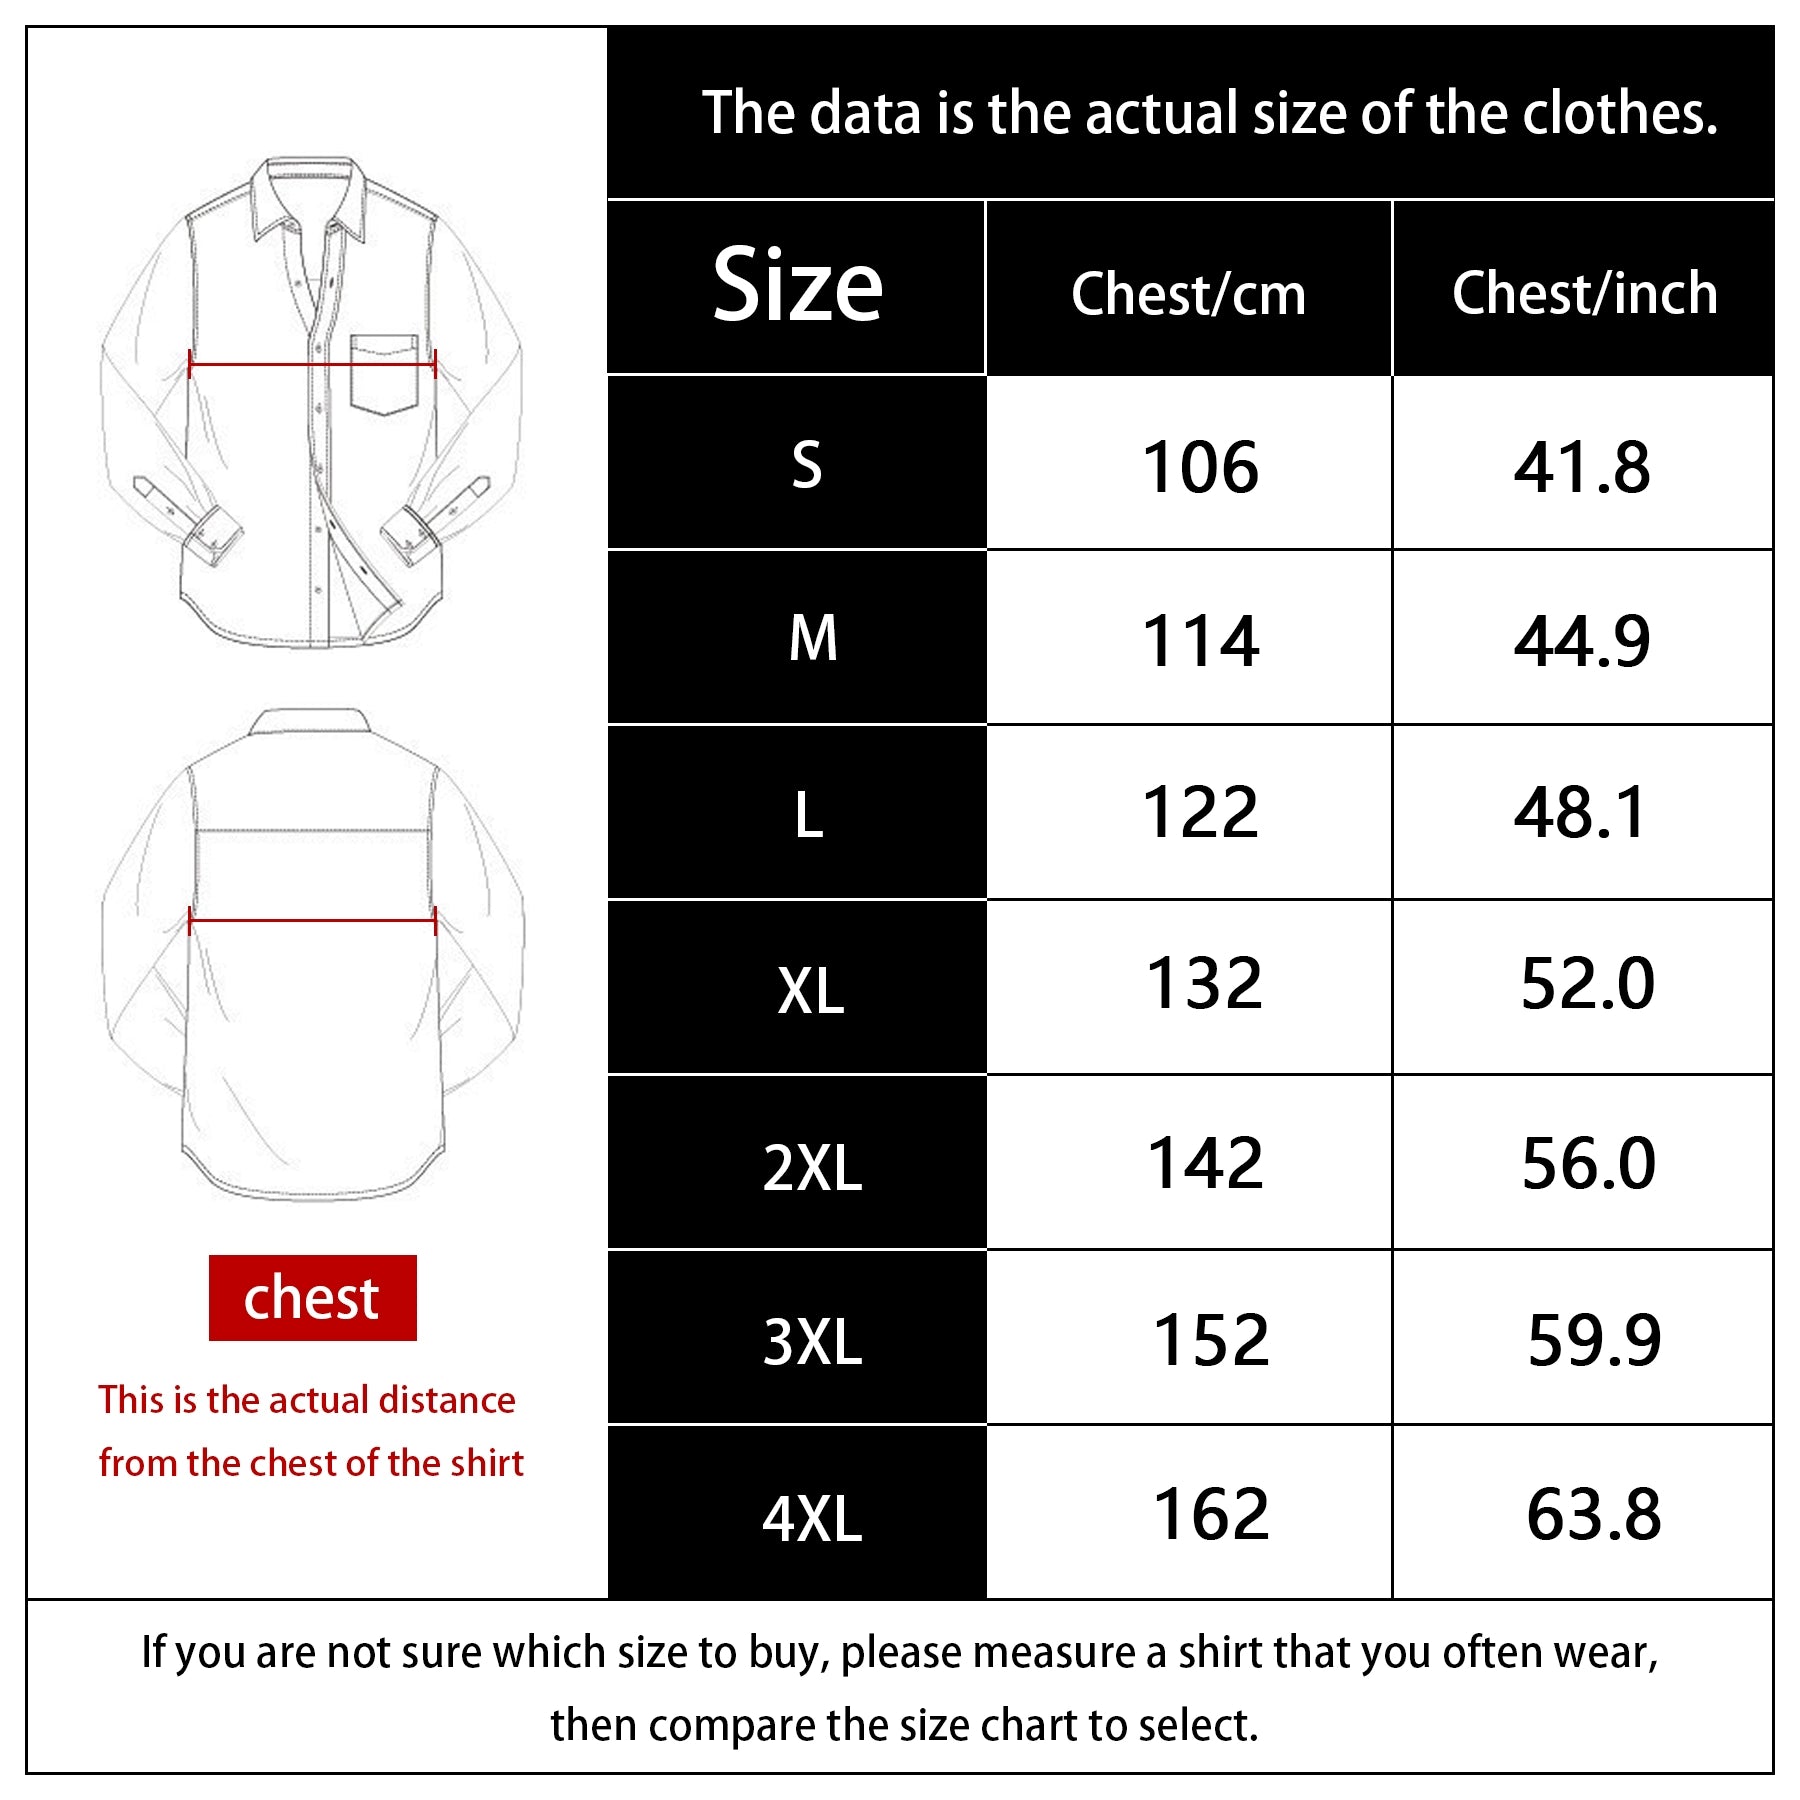 Dubinik® Bamboo Viscose Mens Short Sleeve Button Down Pockets Shirts#39001